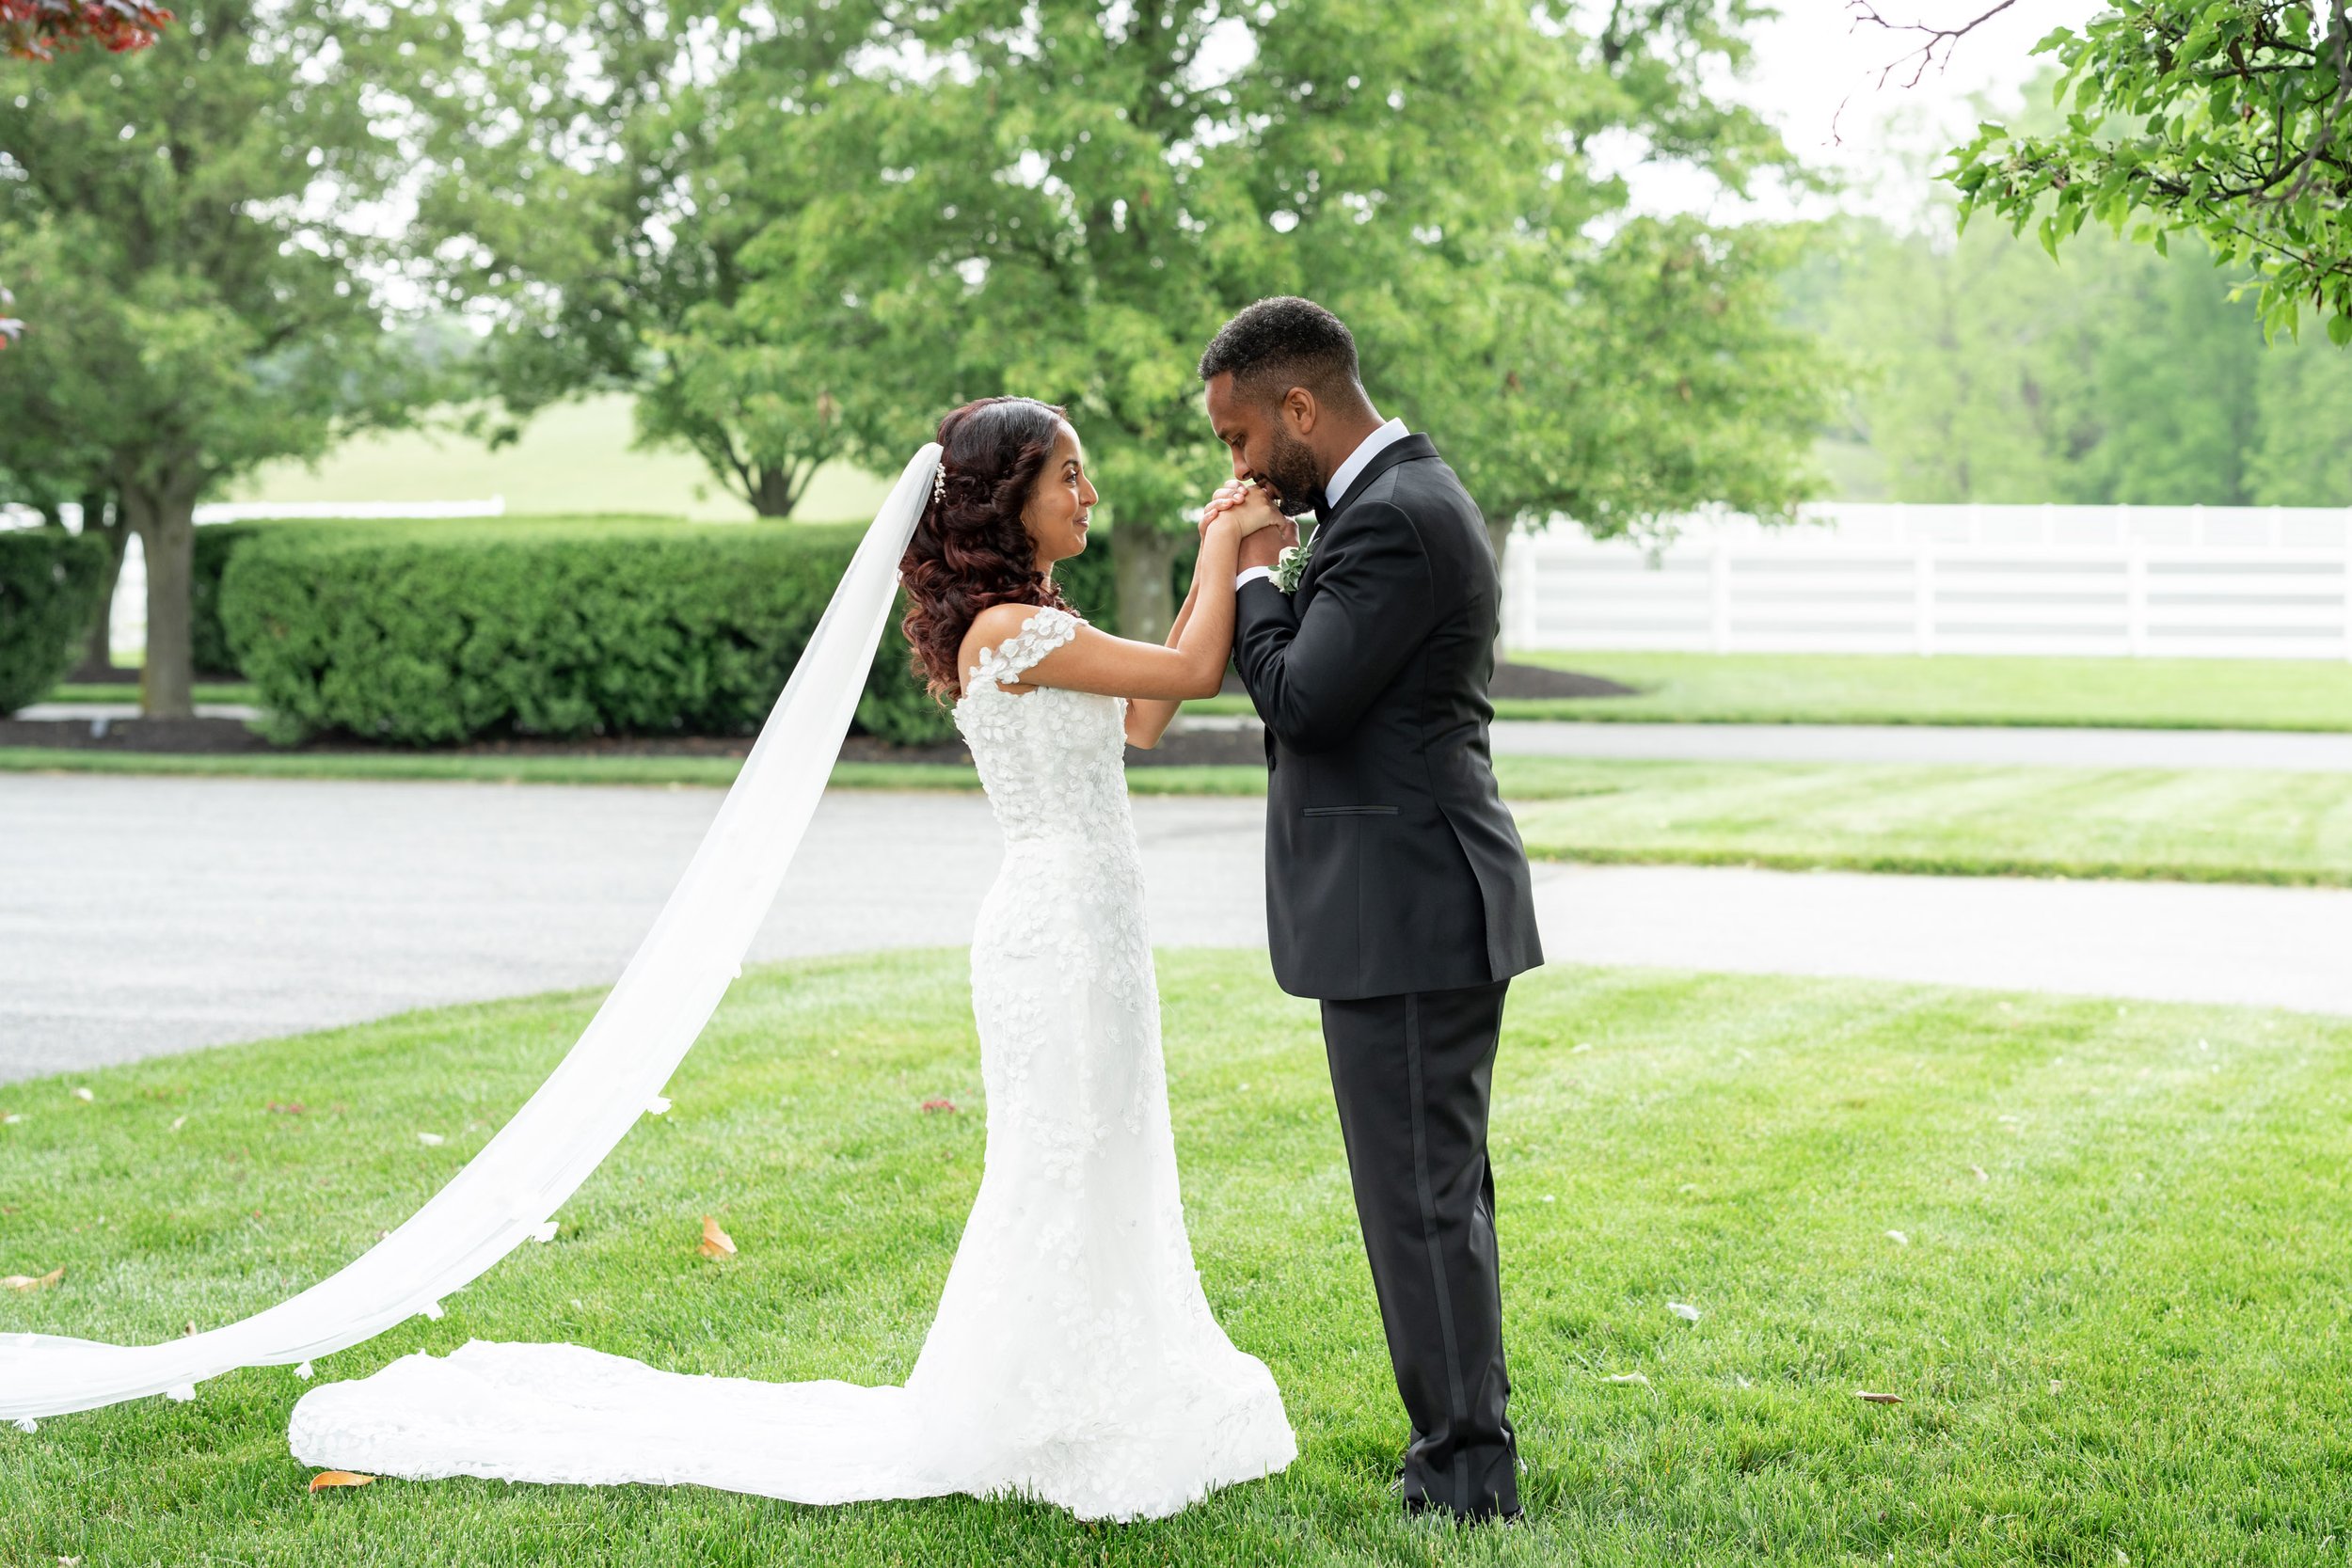 Ethiopian wedding in Washington DC at Vignon Manor Farm